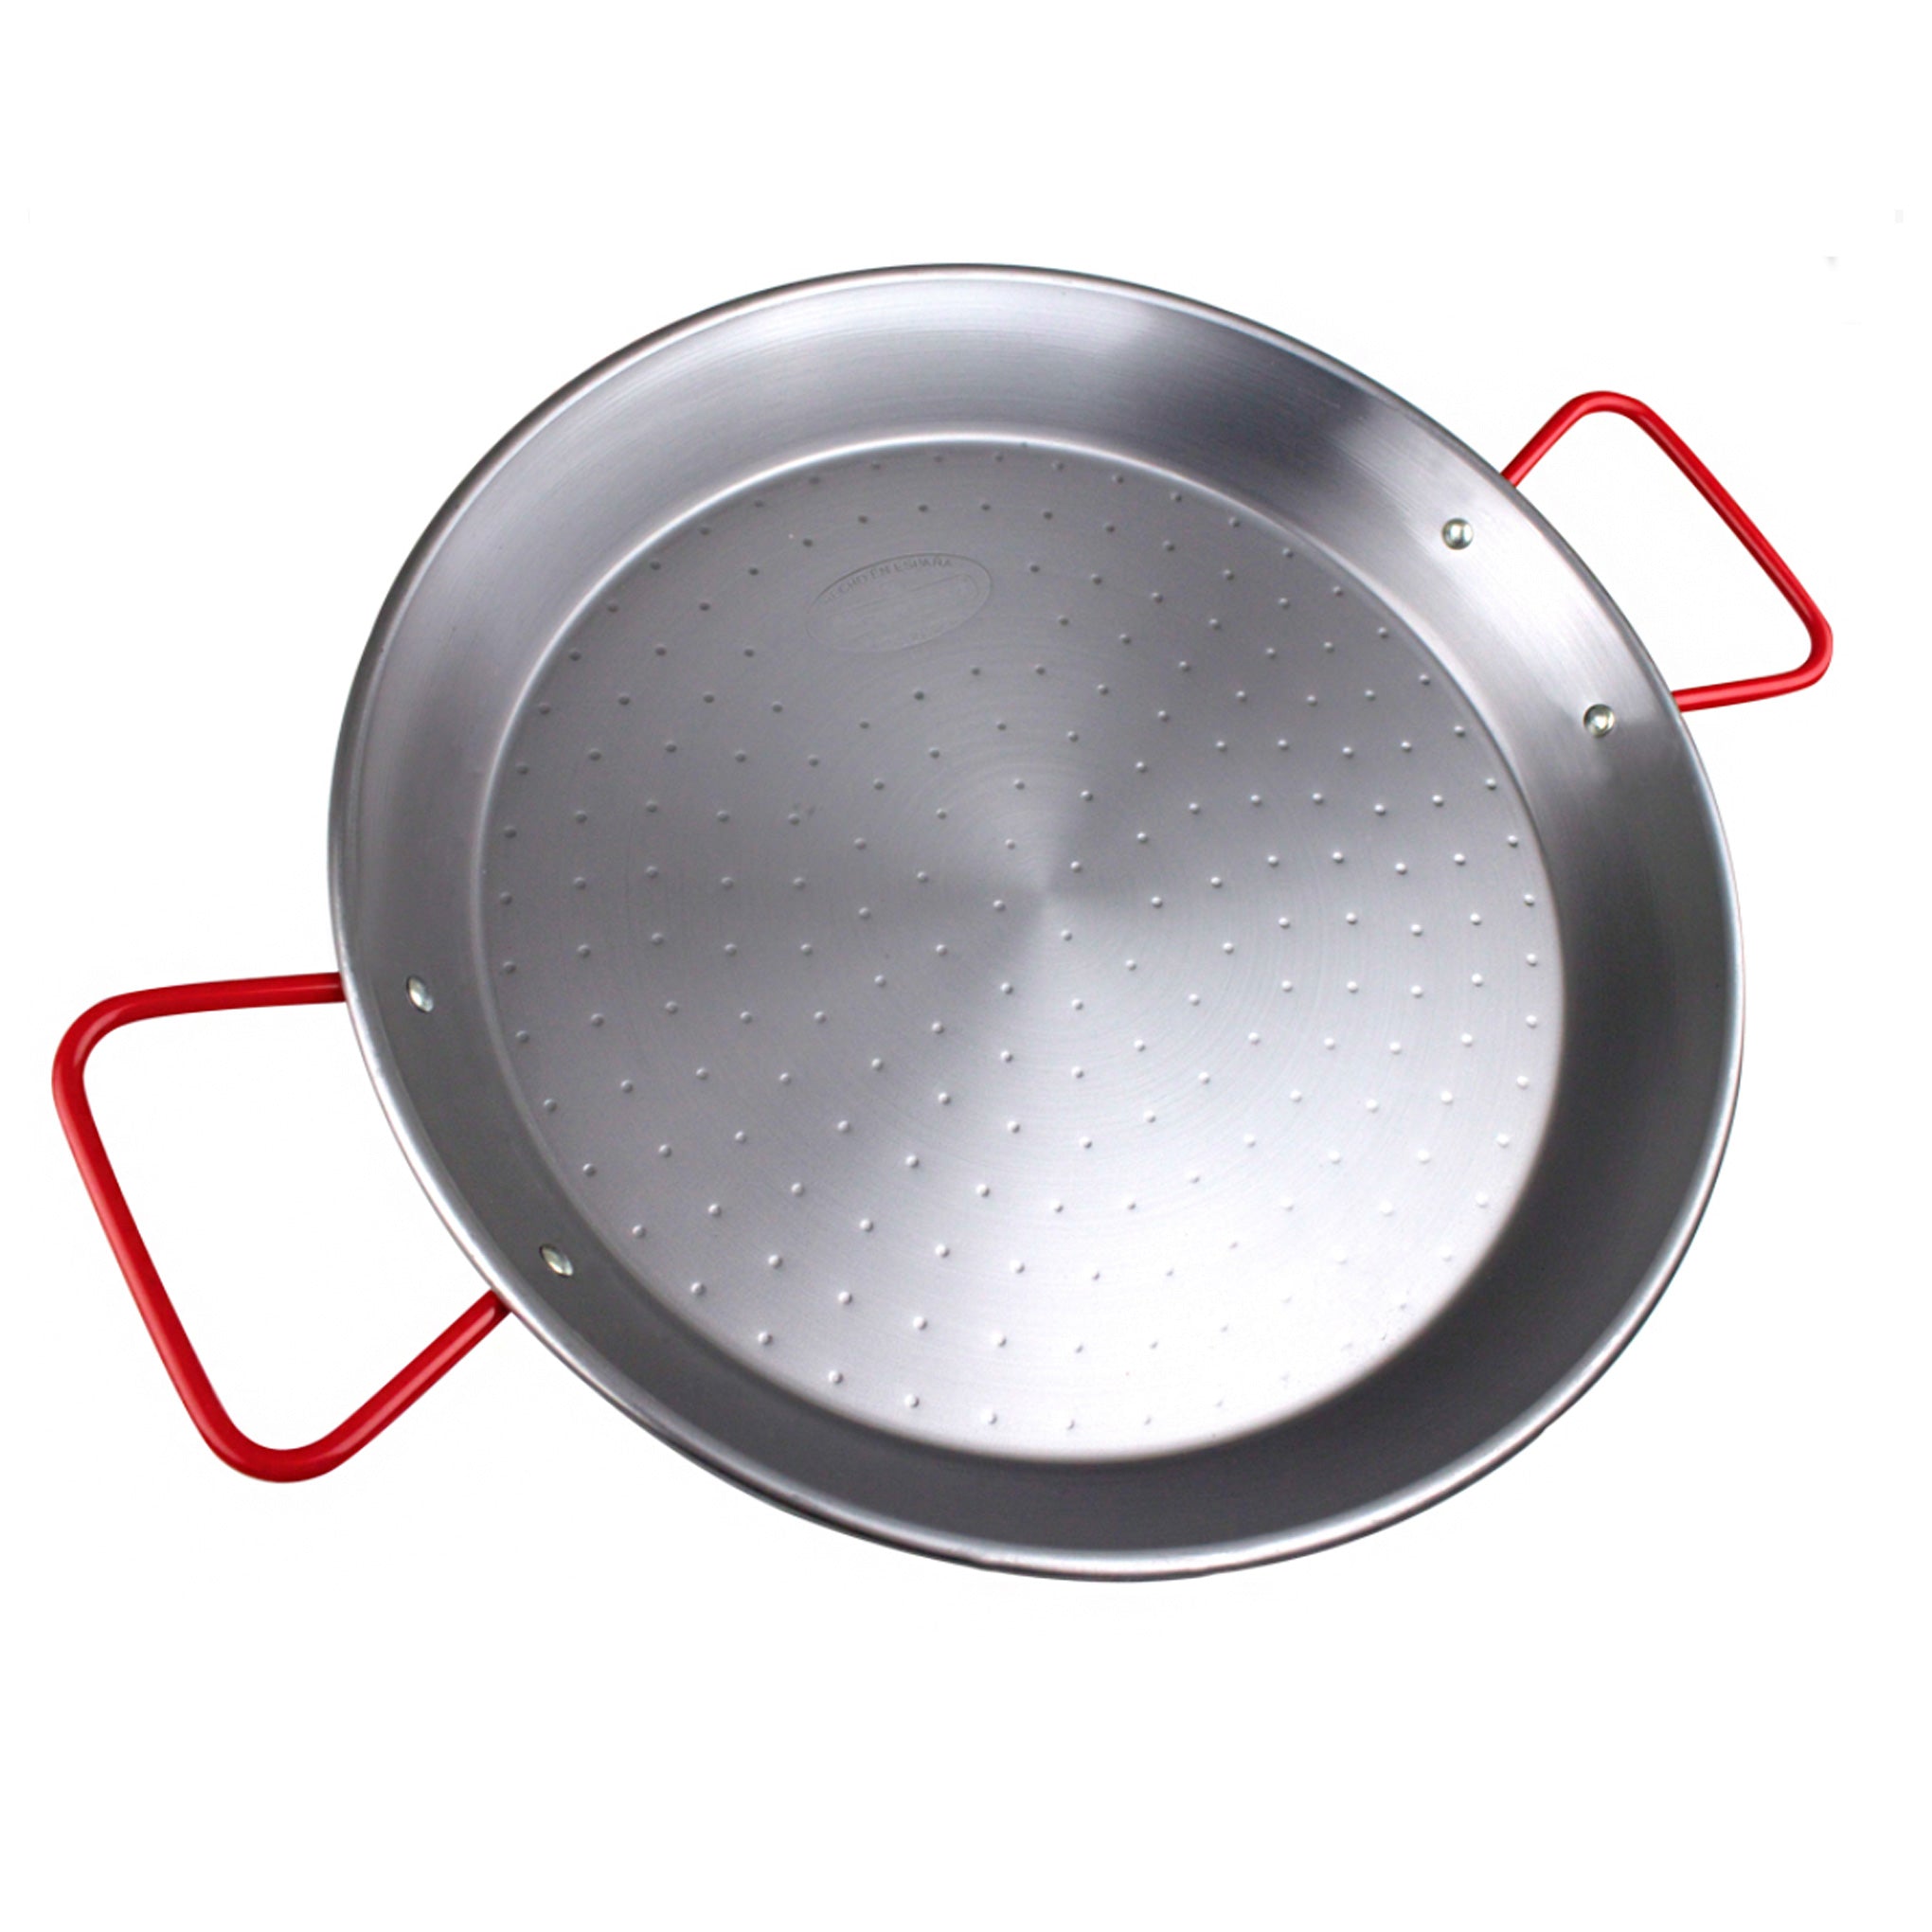 70 cm Professional Paella Burner for 36cm up to 100 cm paella pan